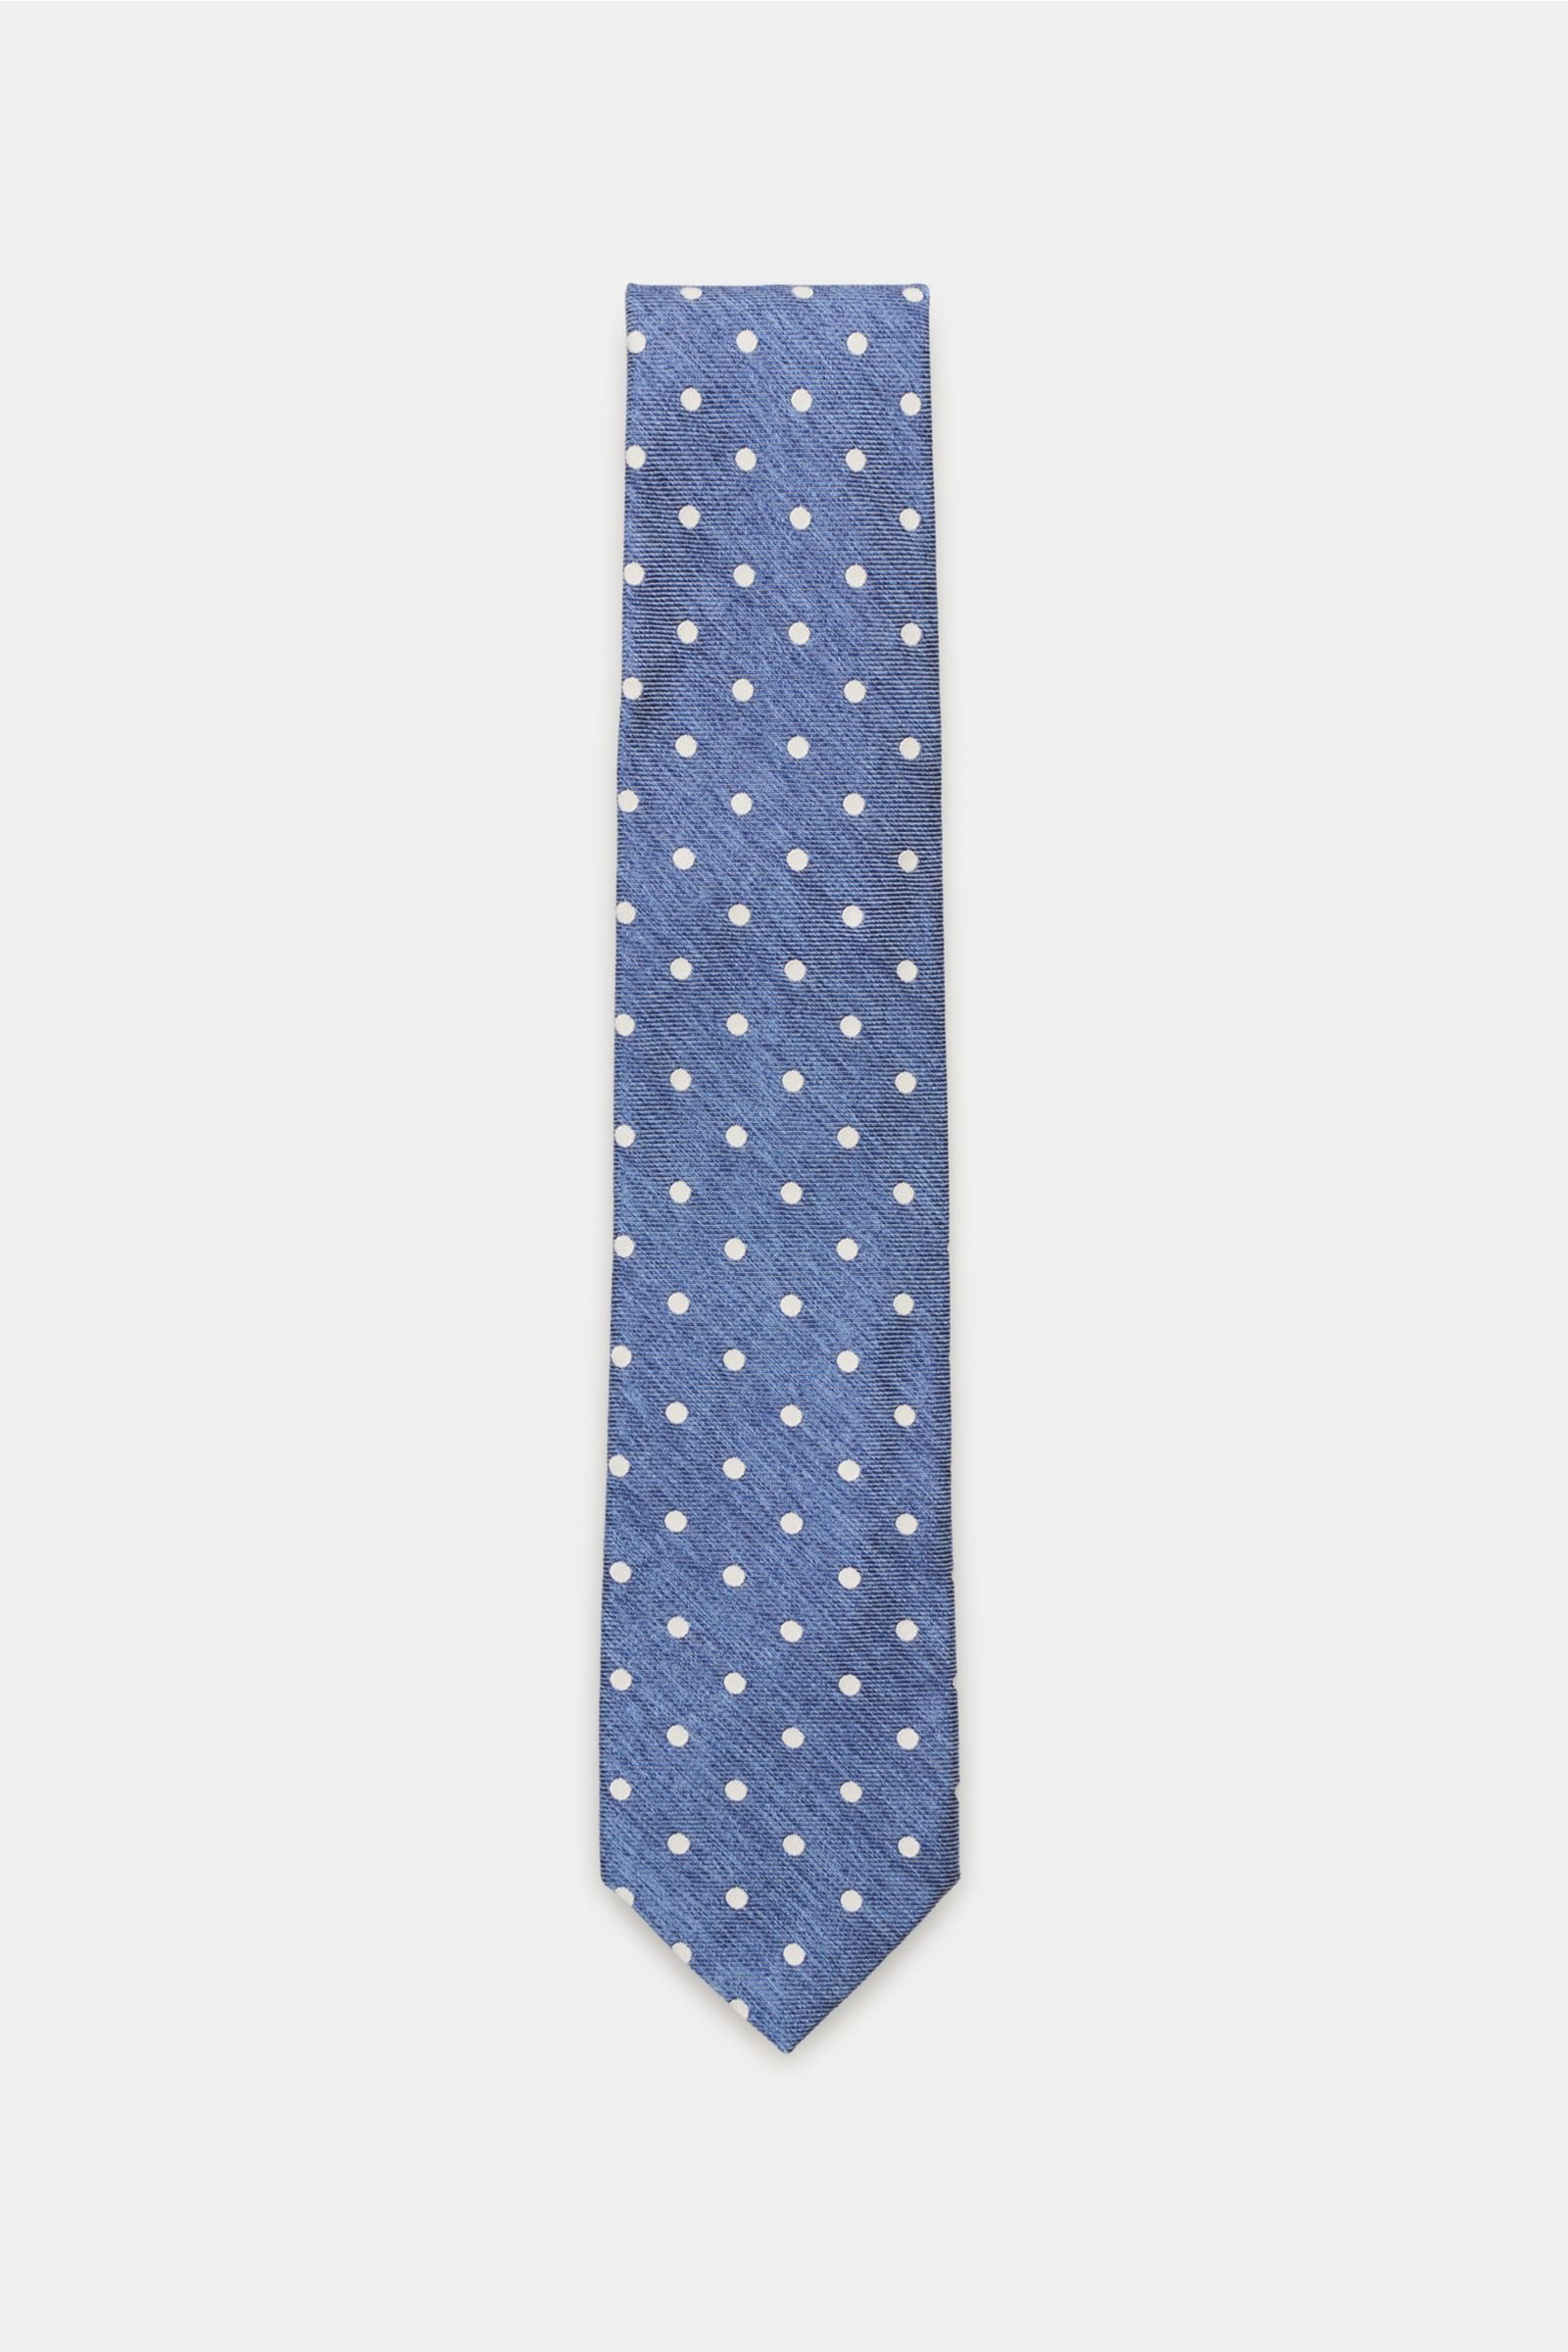 Tie grey-blue with polka dots